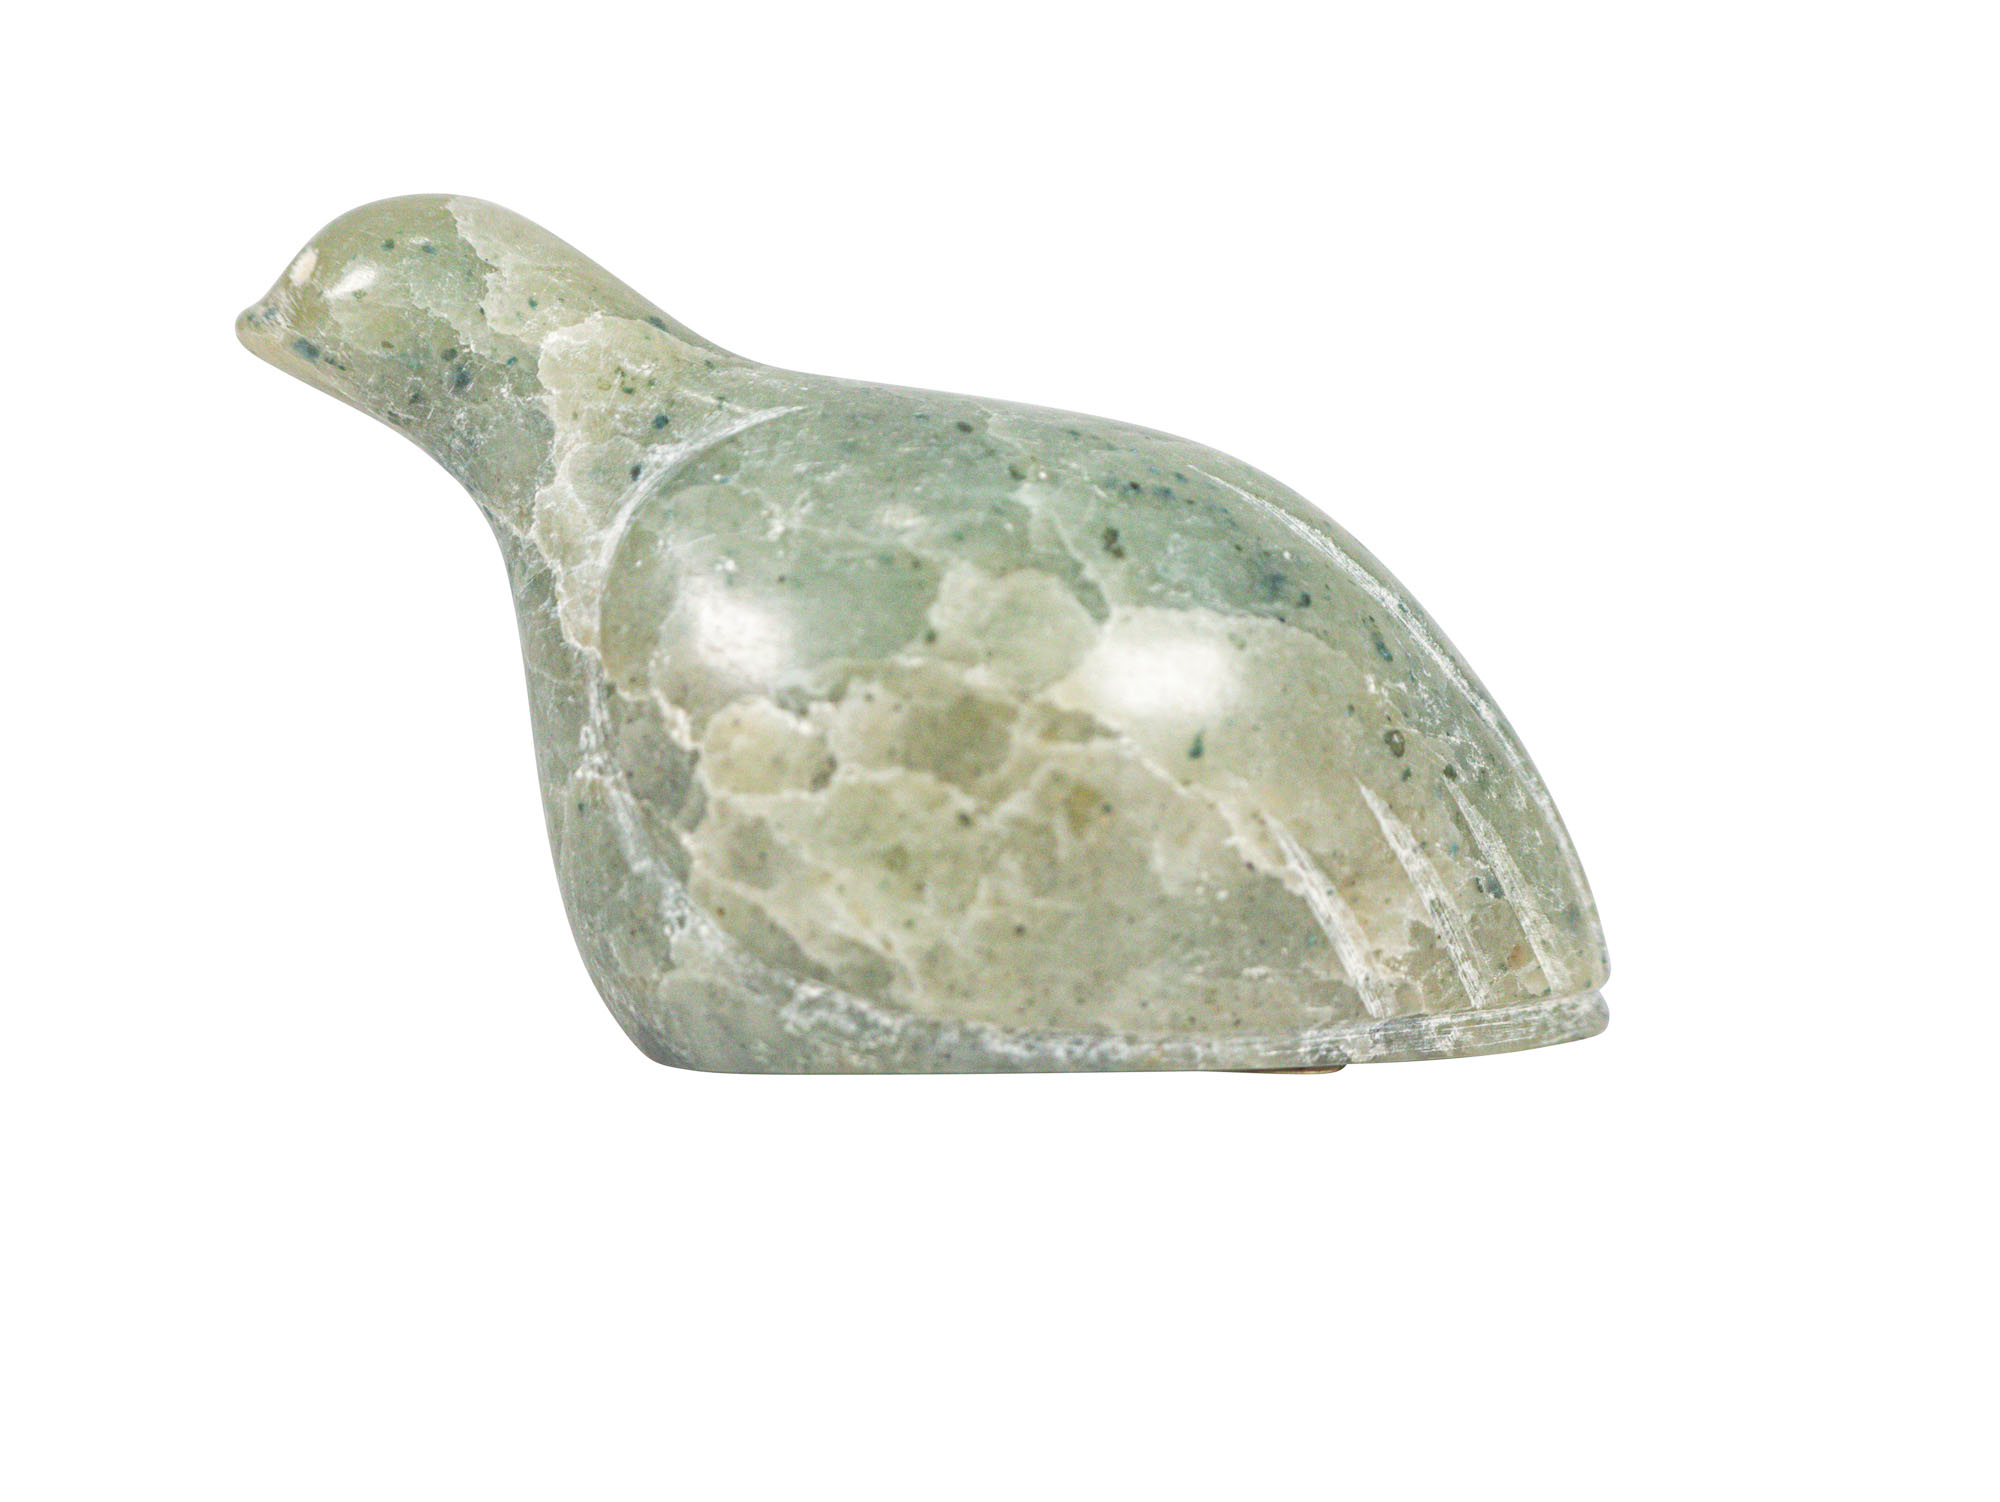 Inuit Soapstone Carving: Bird: Gallery Item - 44-G25 (10URM1)